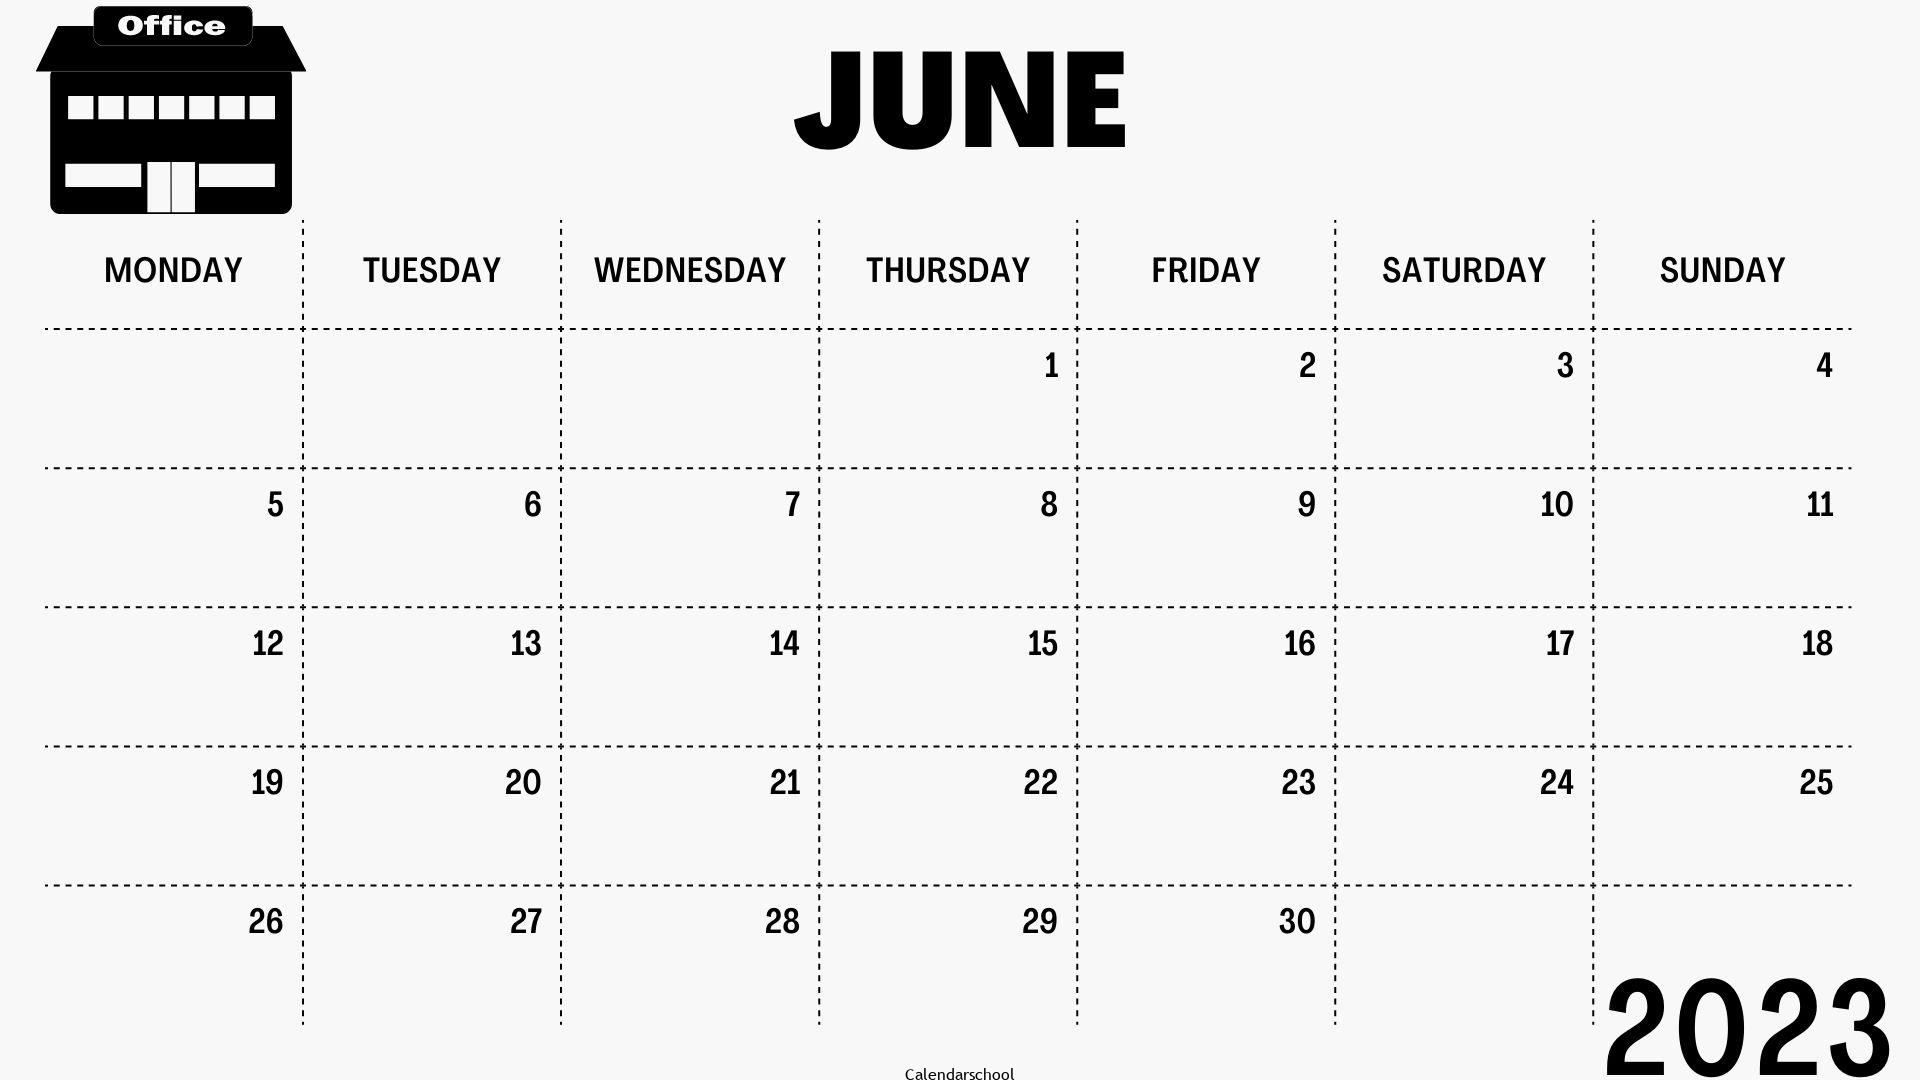 June July 2023 Calendar